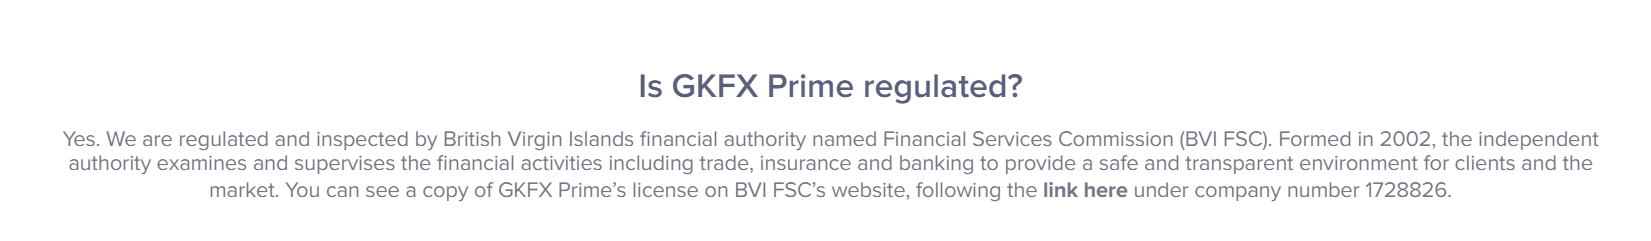 GKFX_regulation